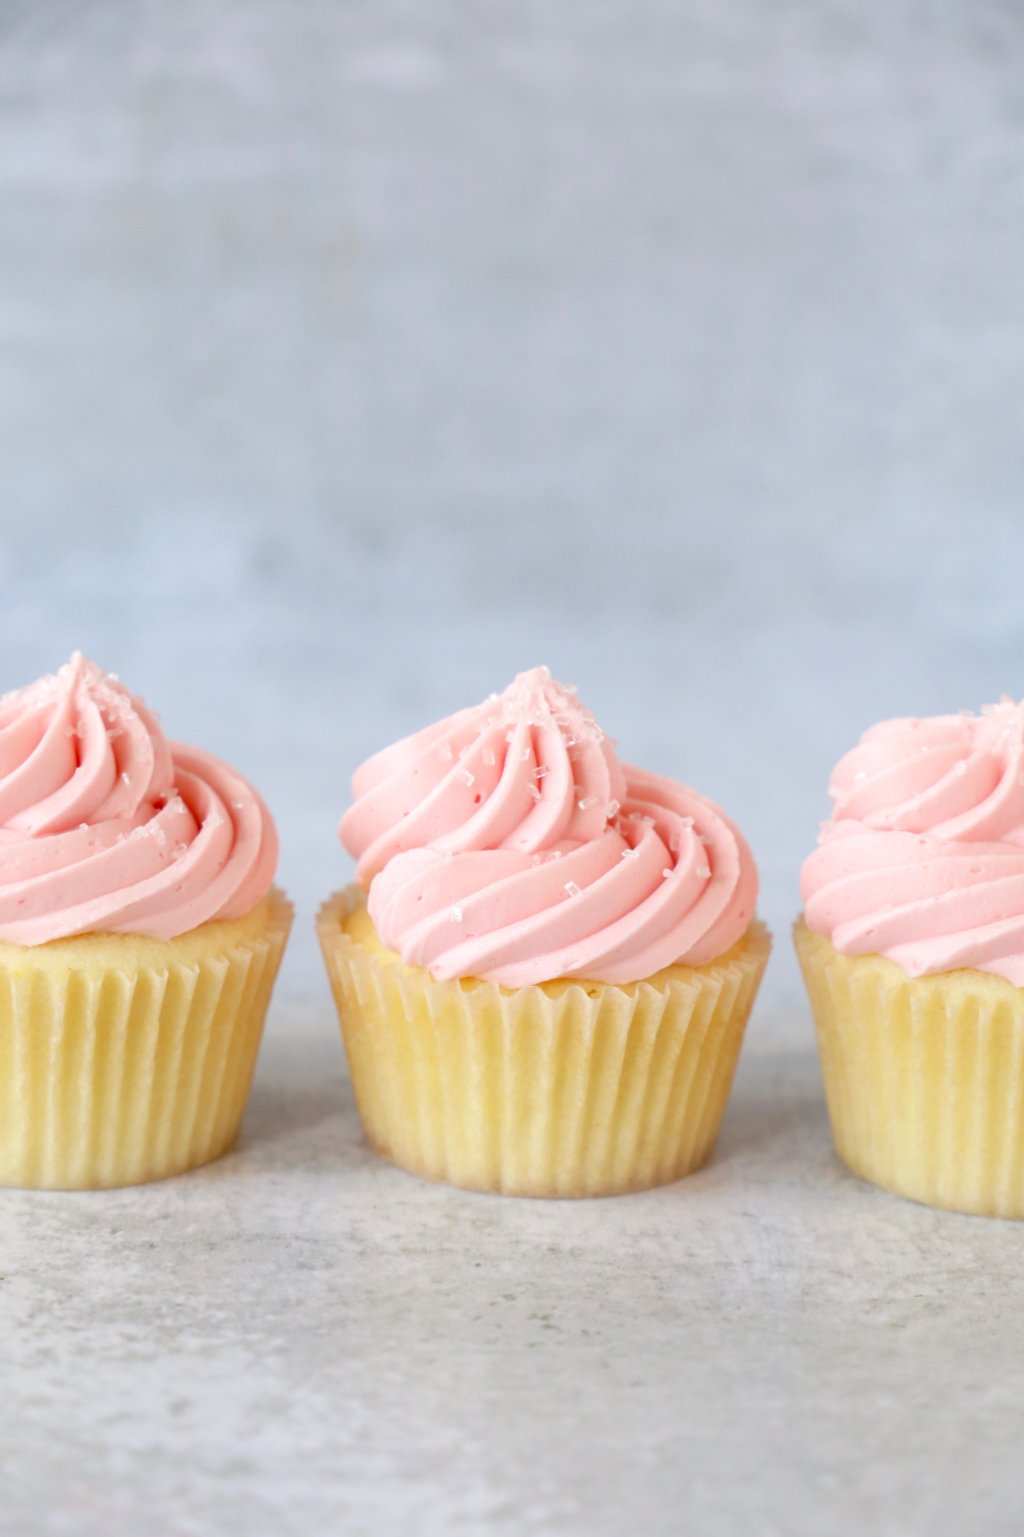 Three vanilla cupcakes with pink frosting and sugar crystals.  